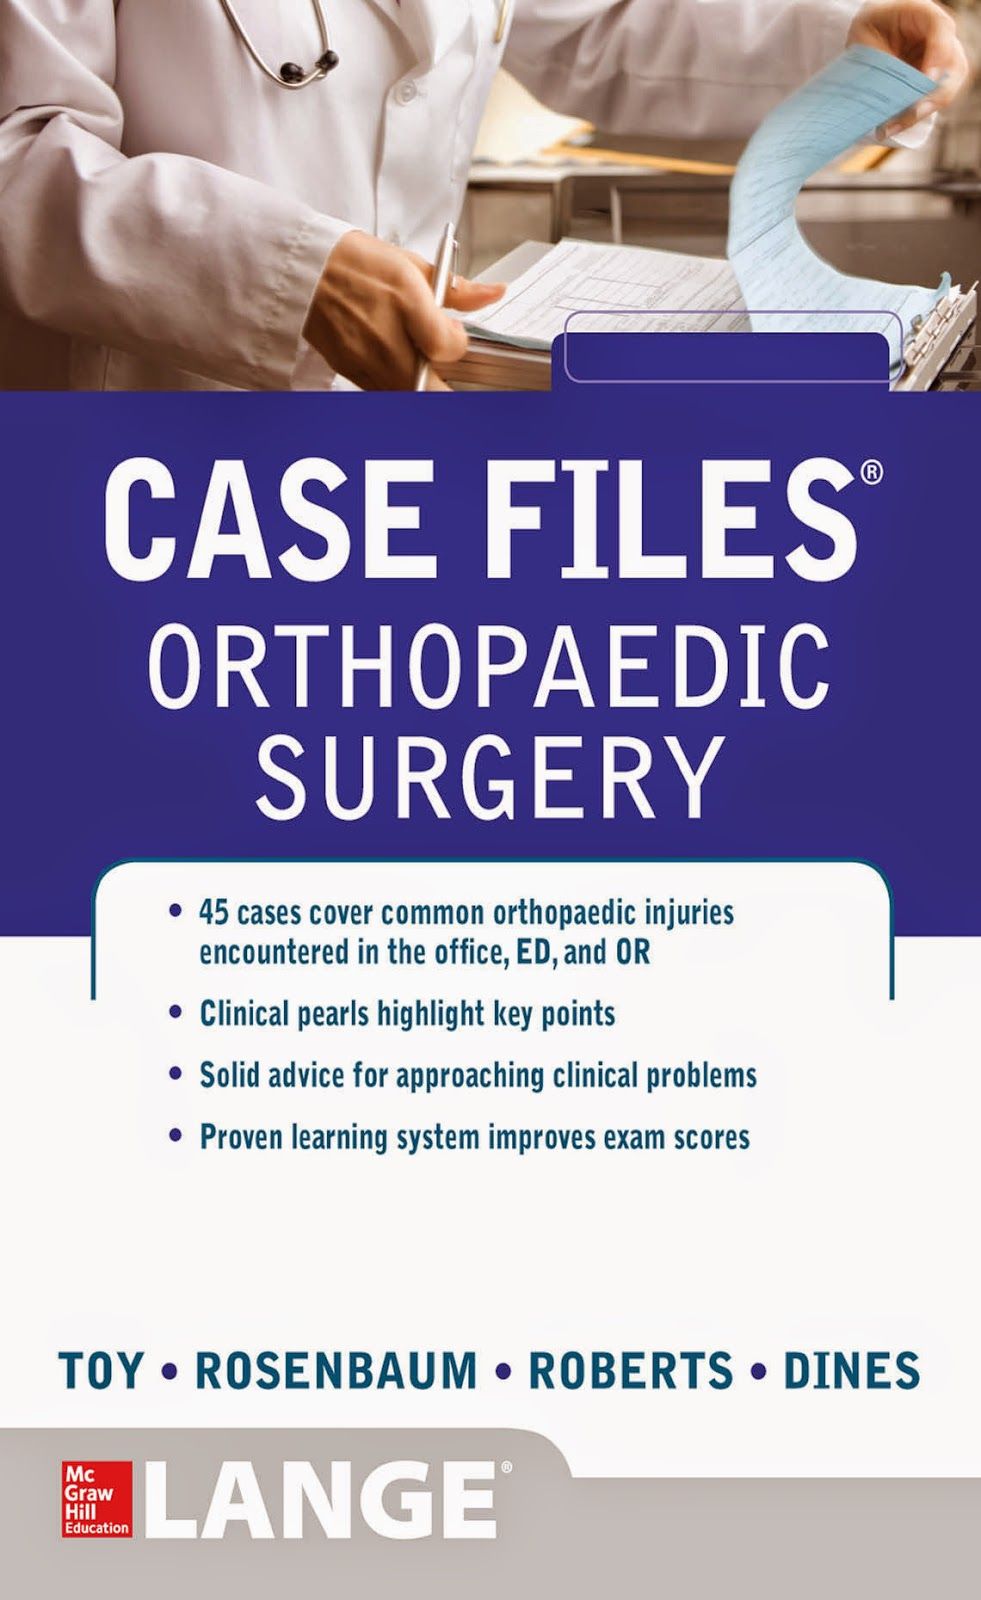 Case Files Orthopaedic Surgery PDF